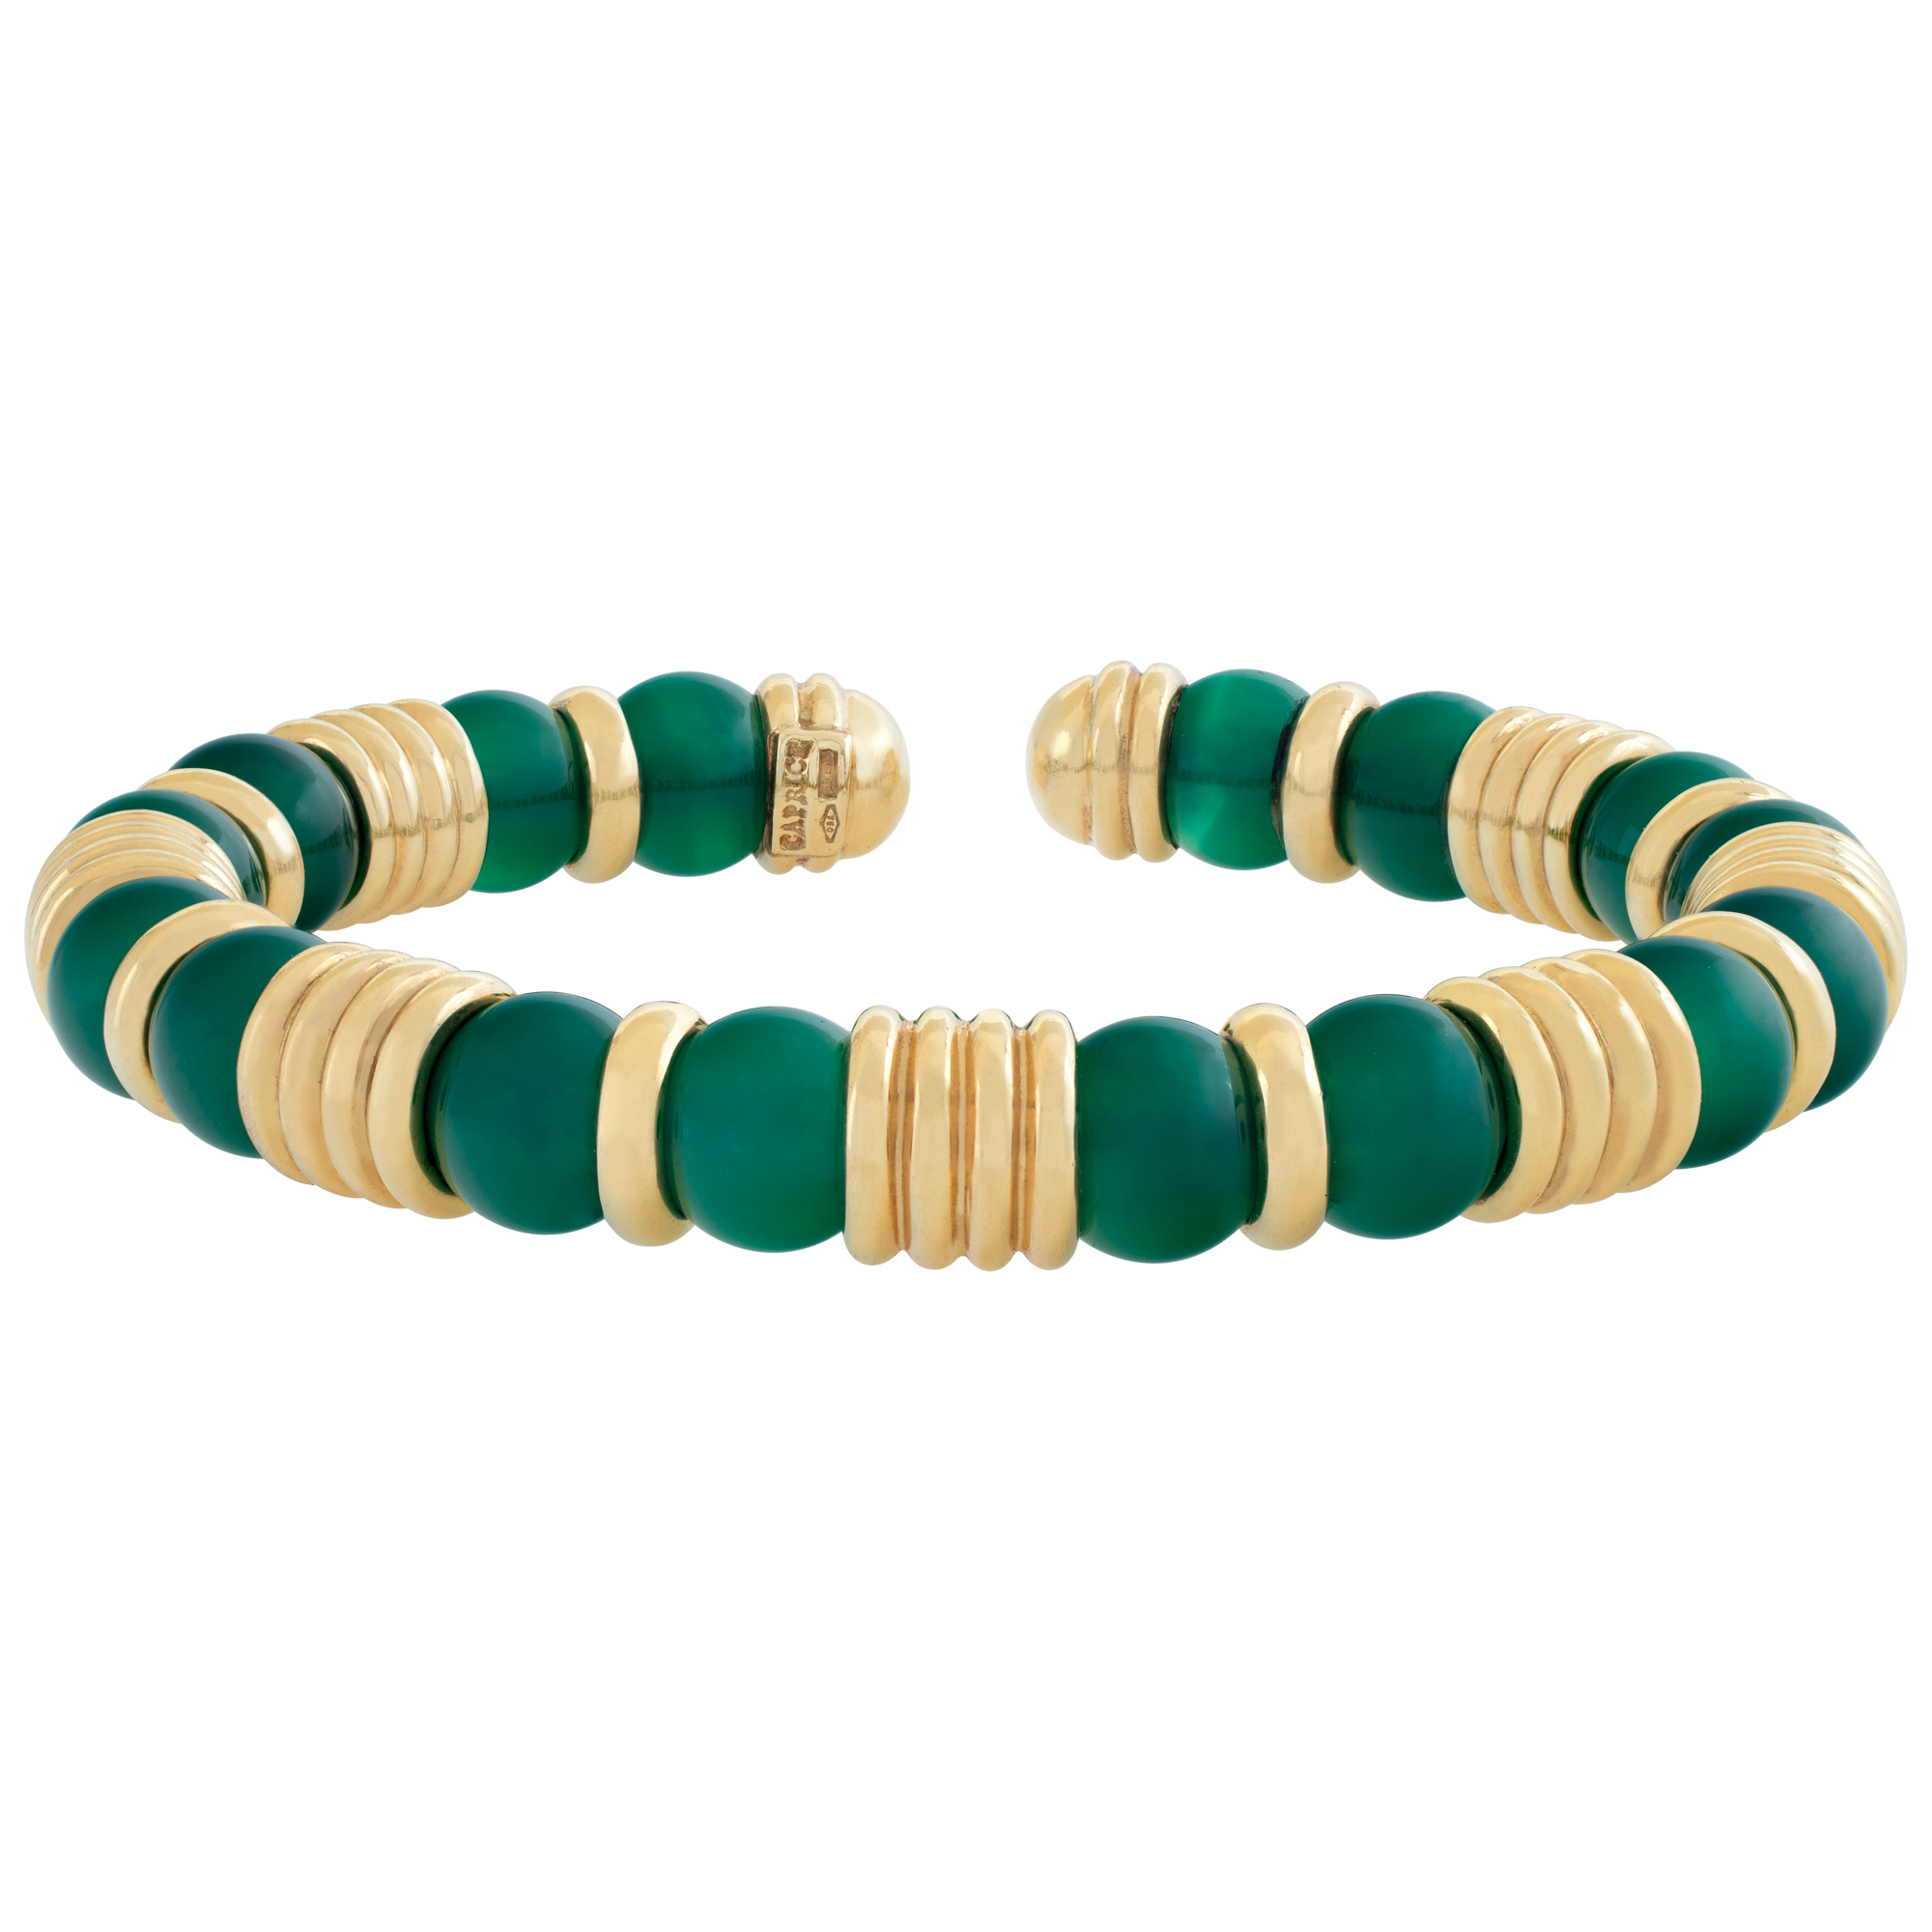 Caprice jade bracelet in 18k fits up to 5- 6.5 inch wrist image 1